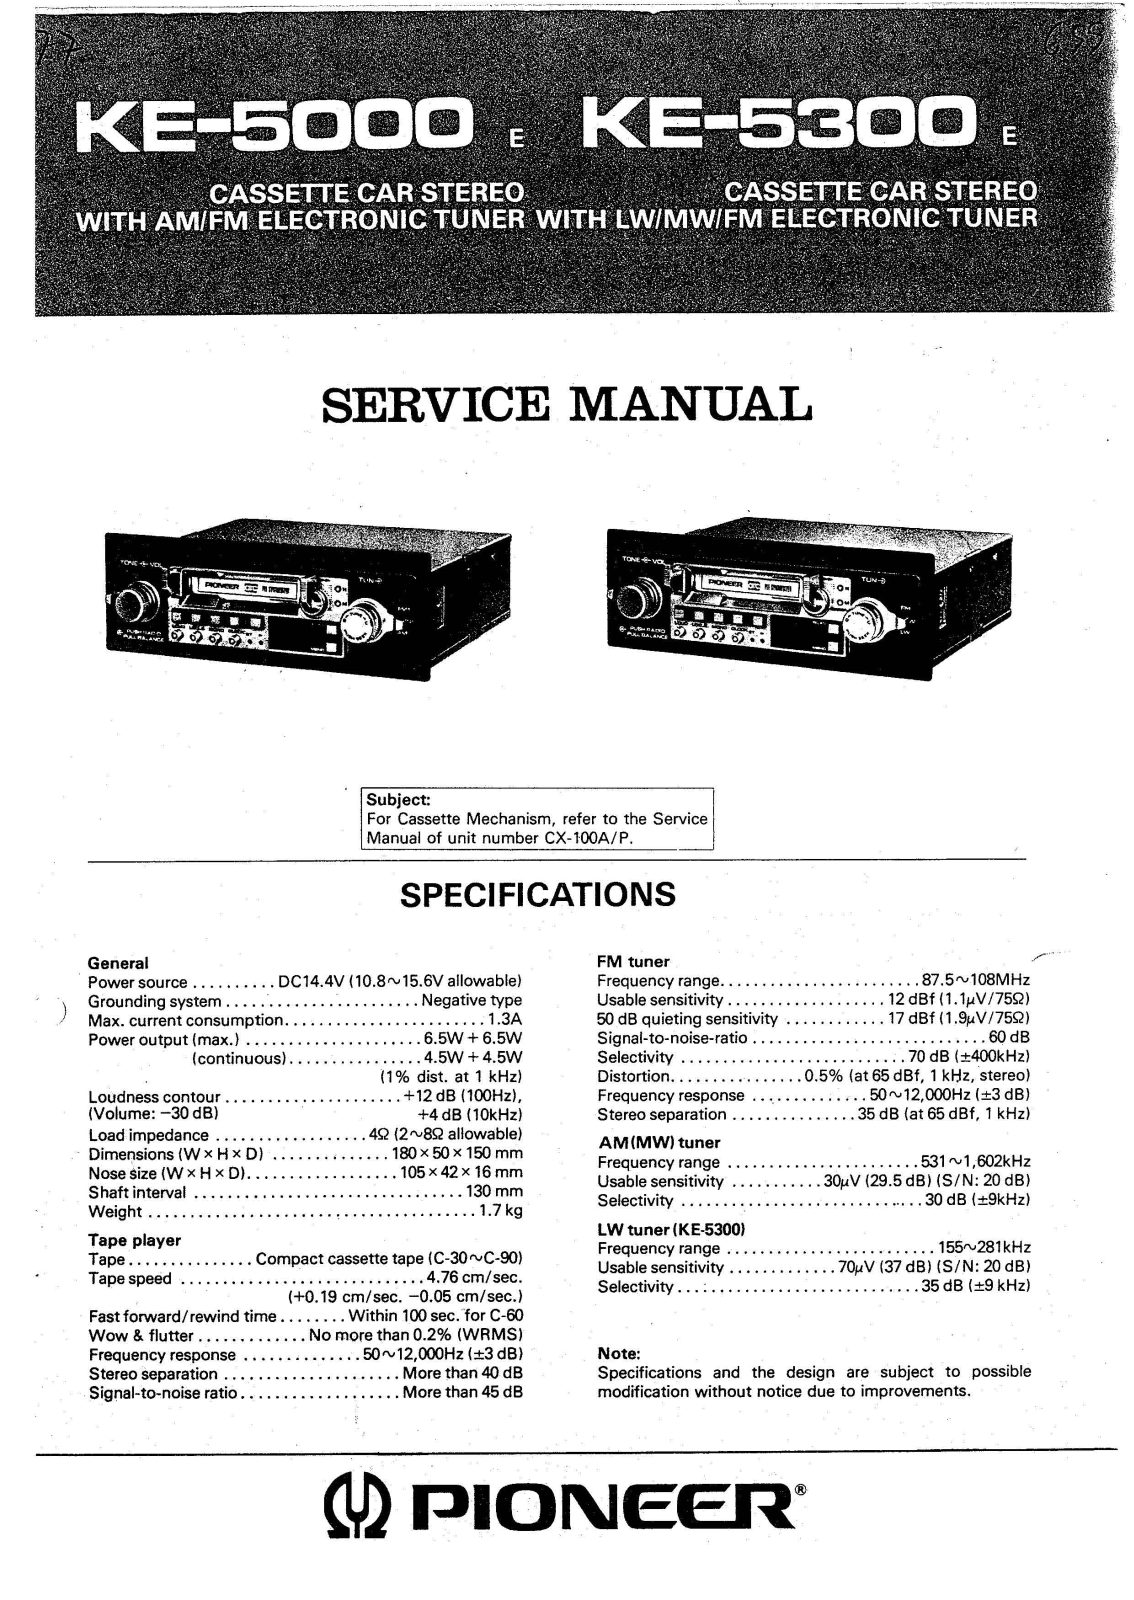 Pioneer KE-5000, KE-5300 Service manual